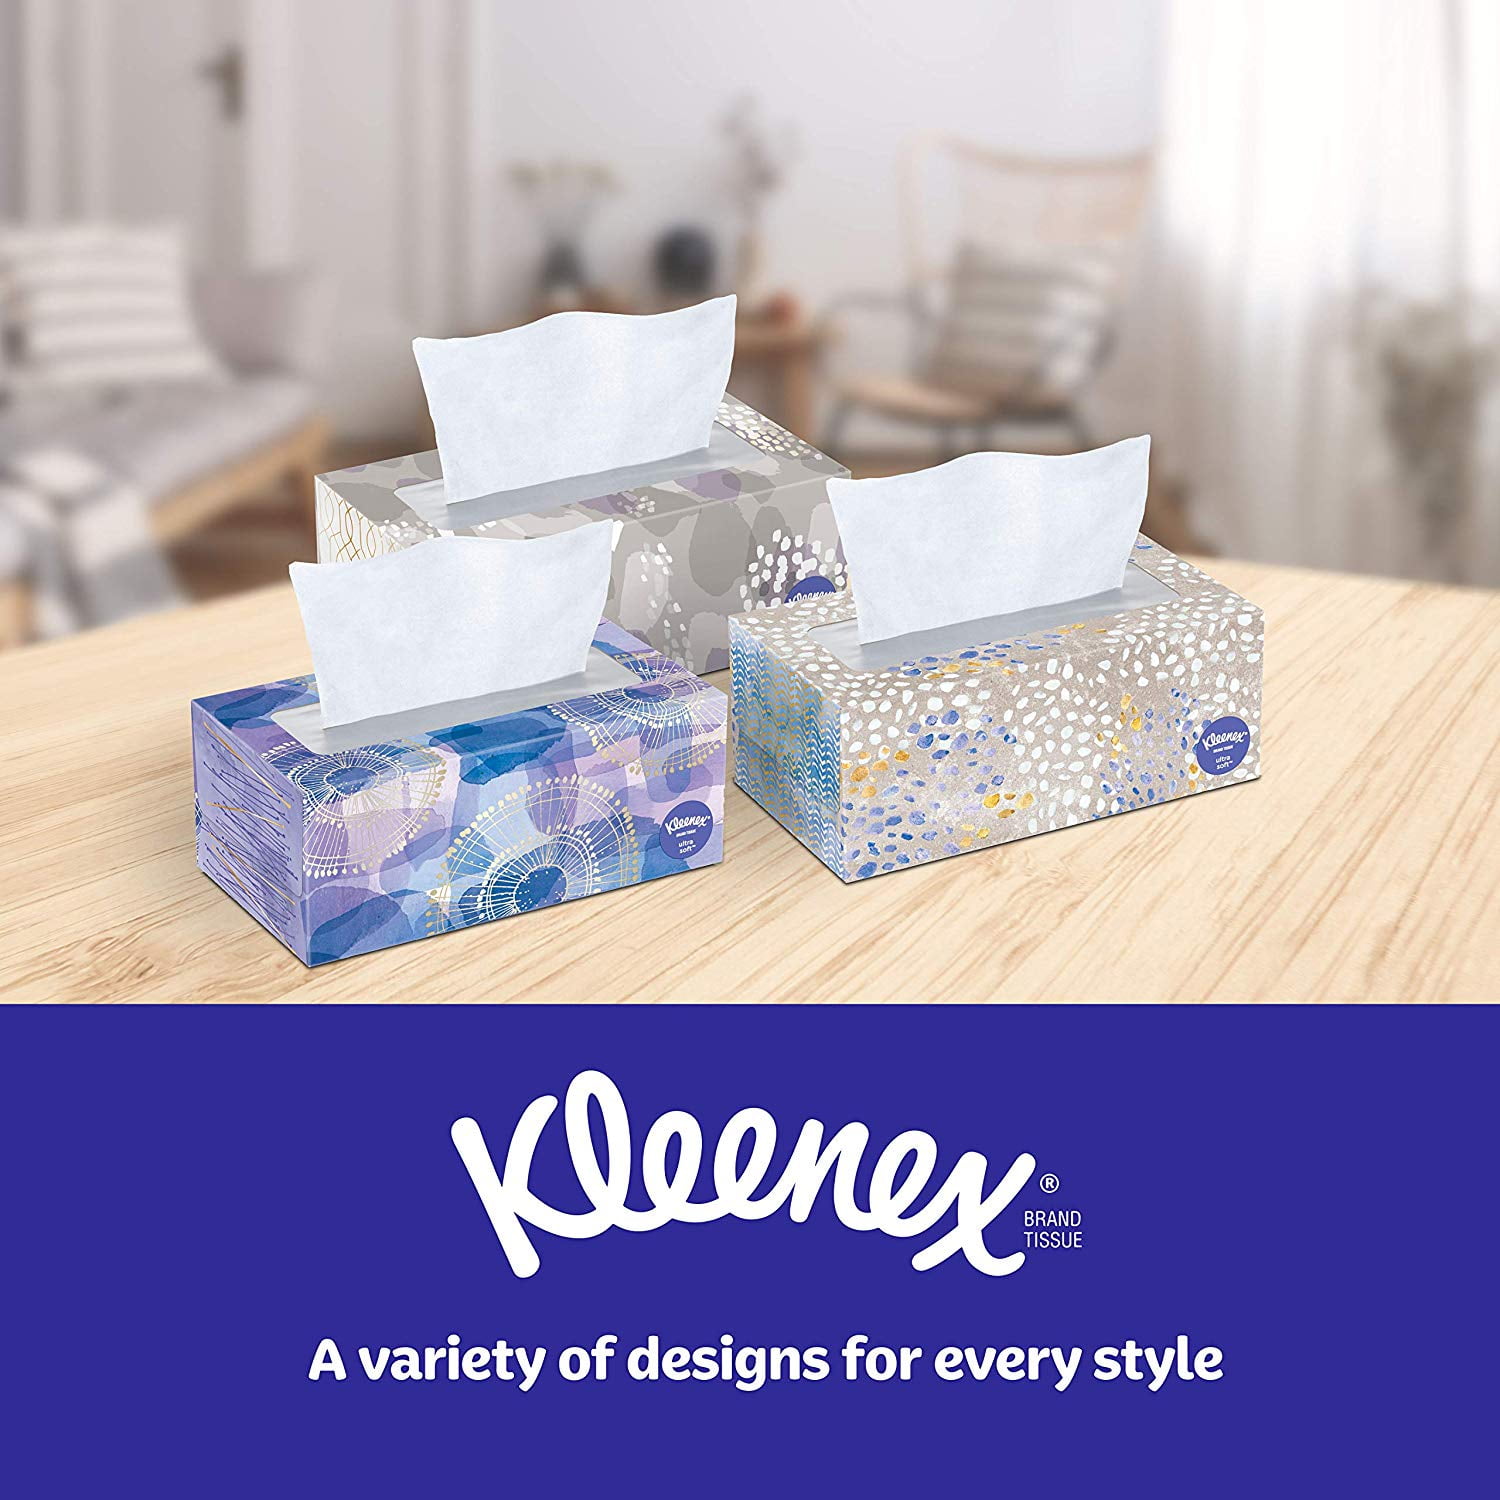 Kleenex Ultra Soft Facial Tissues, 4 Flat Boxes, 120 White Tissues